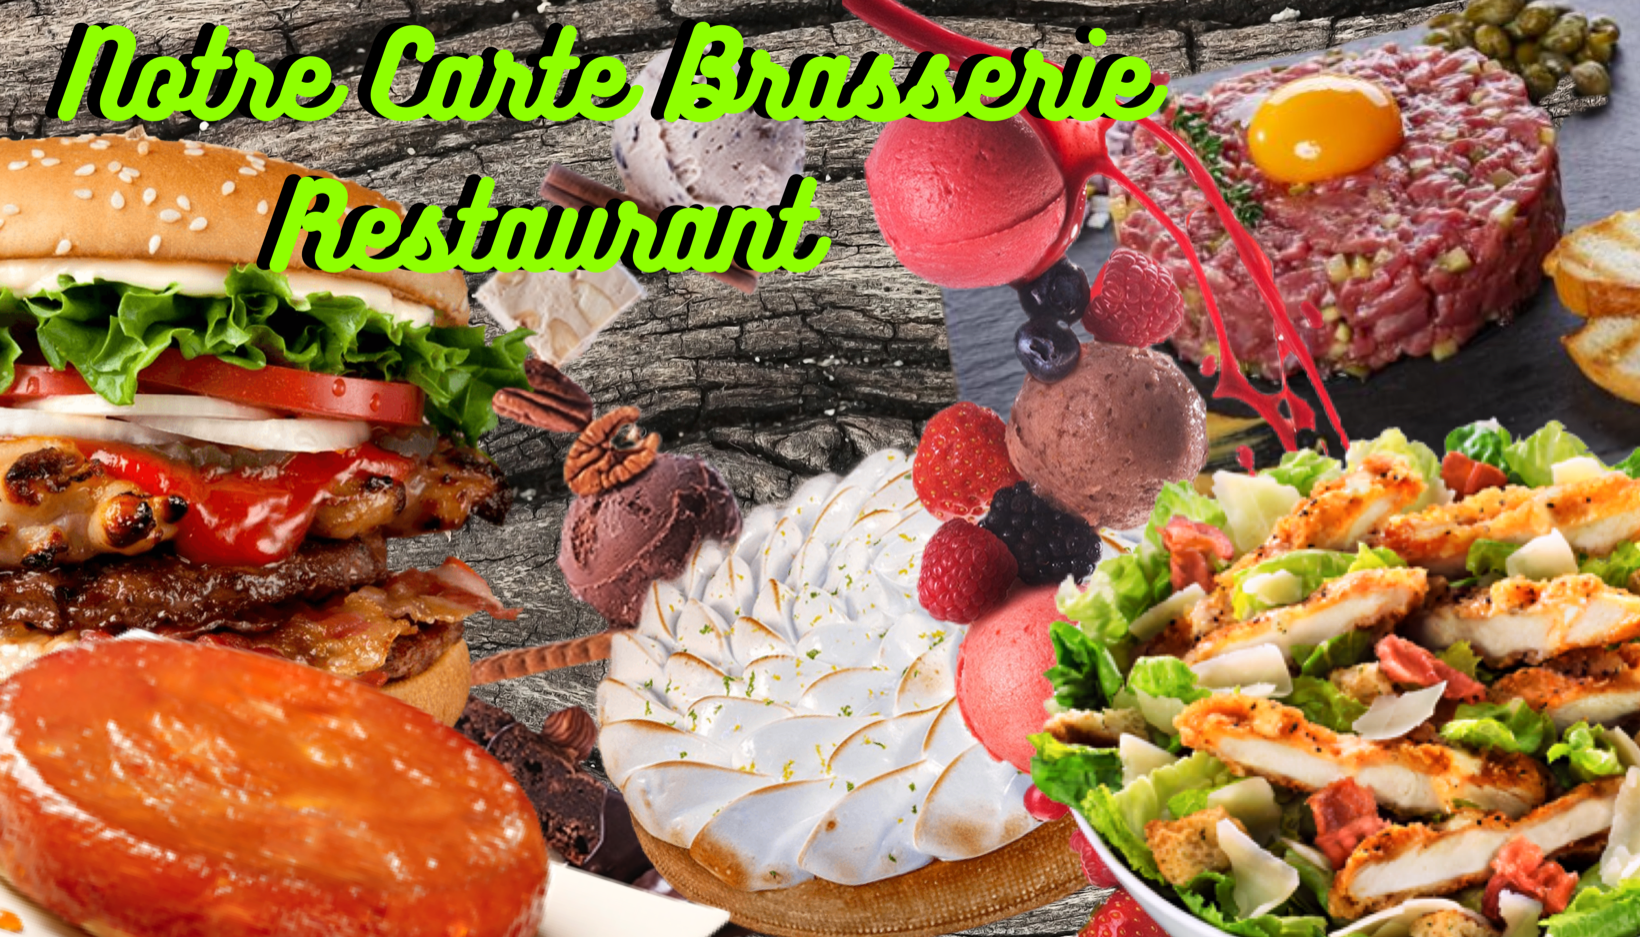 Carte Brasserie